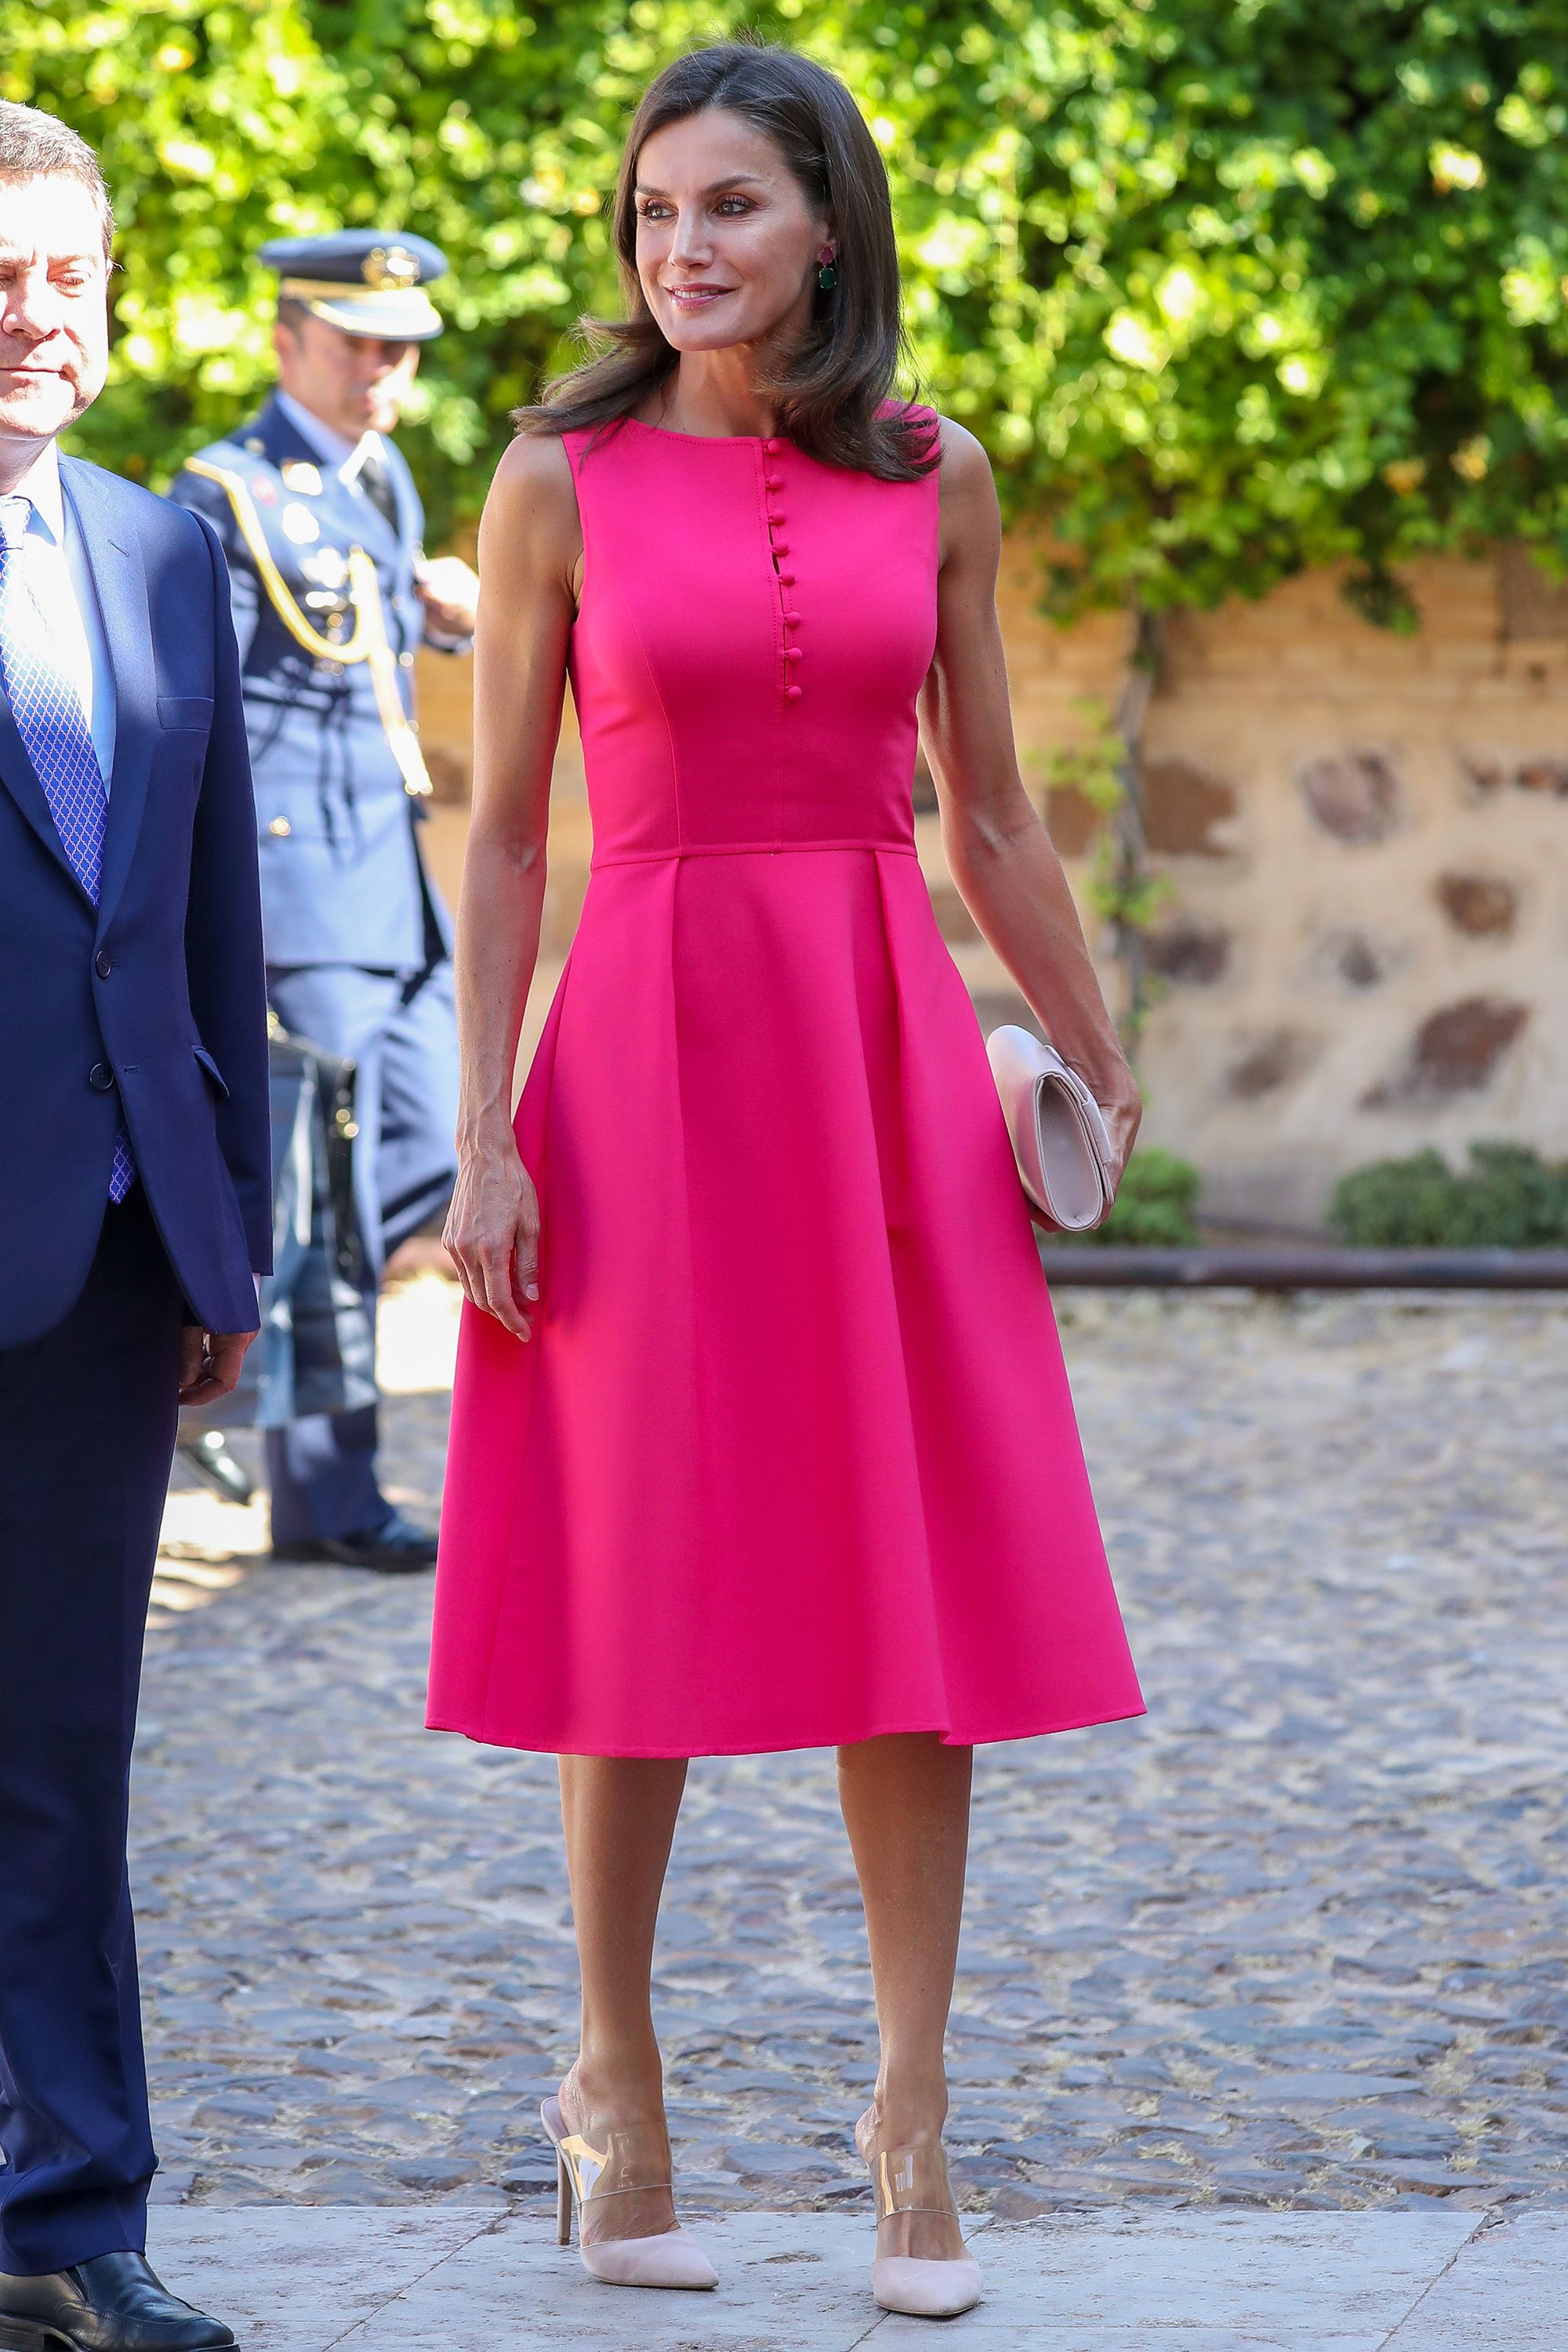 Mil millones para agregar Millas La reina Letizia repite el vestido midi rosa de Carolina Herrera